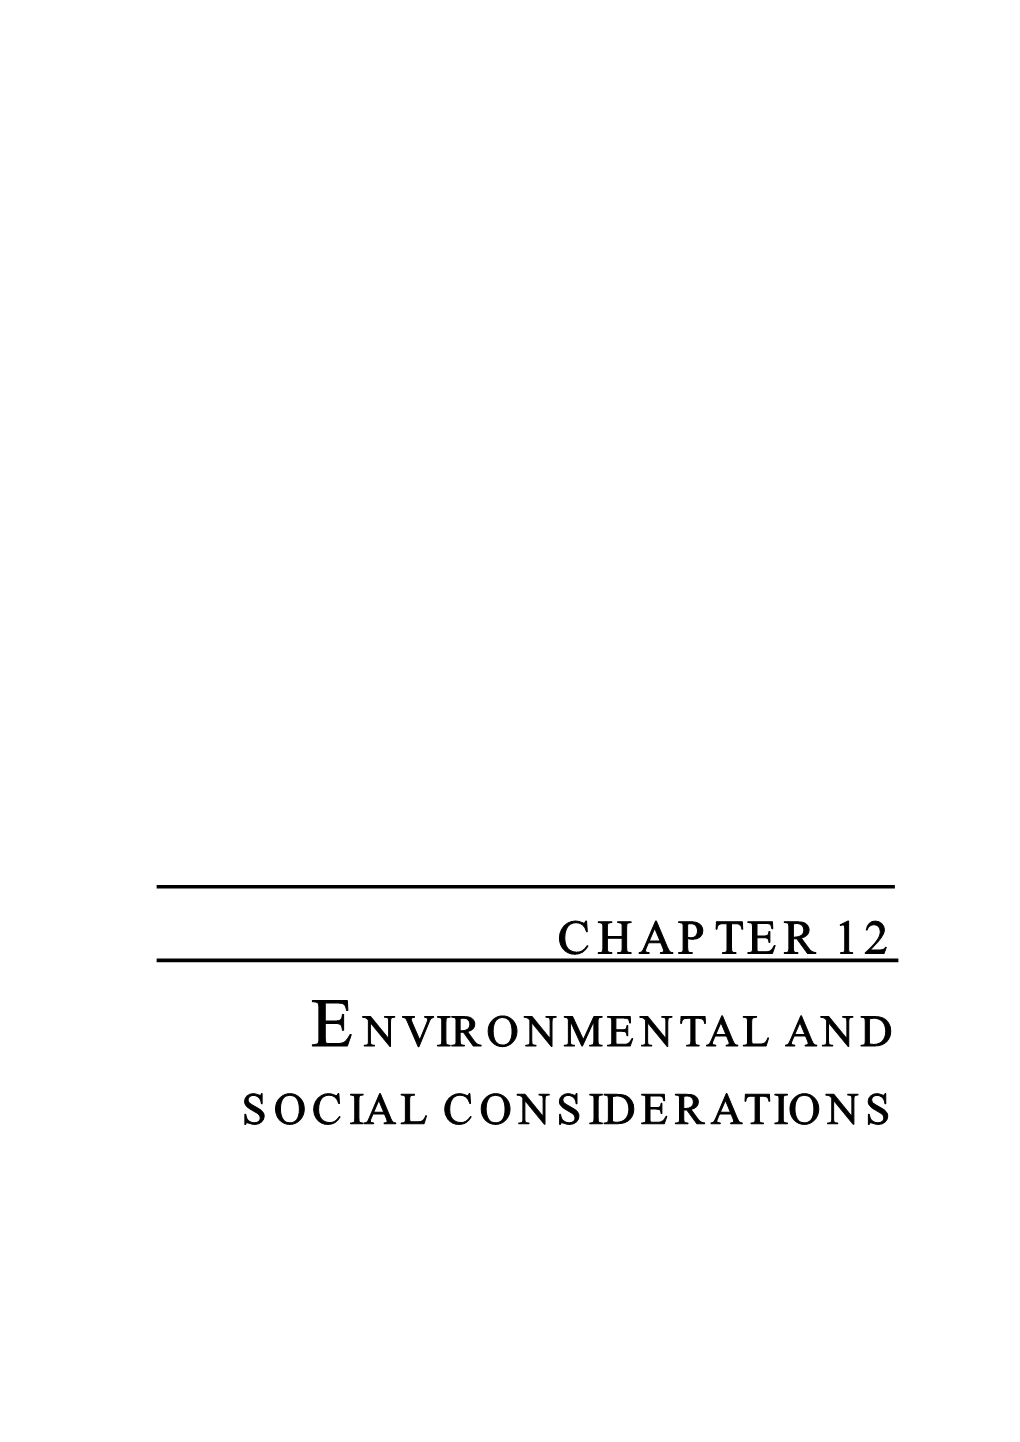 Chapter 12 Environmental and Social Considerations